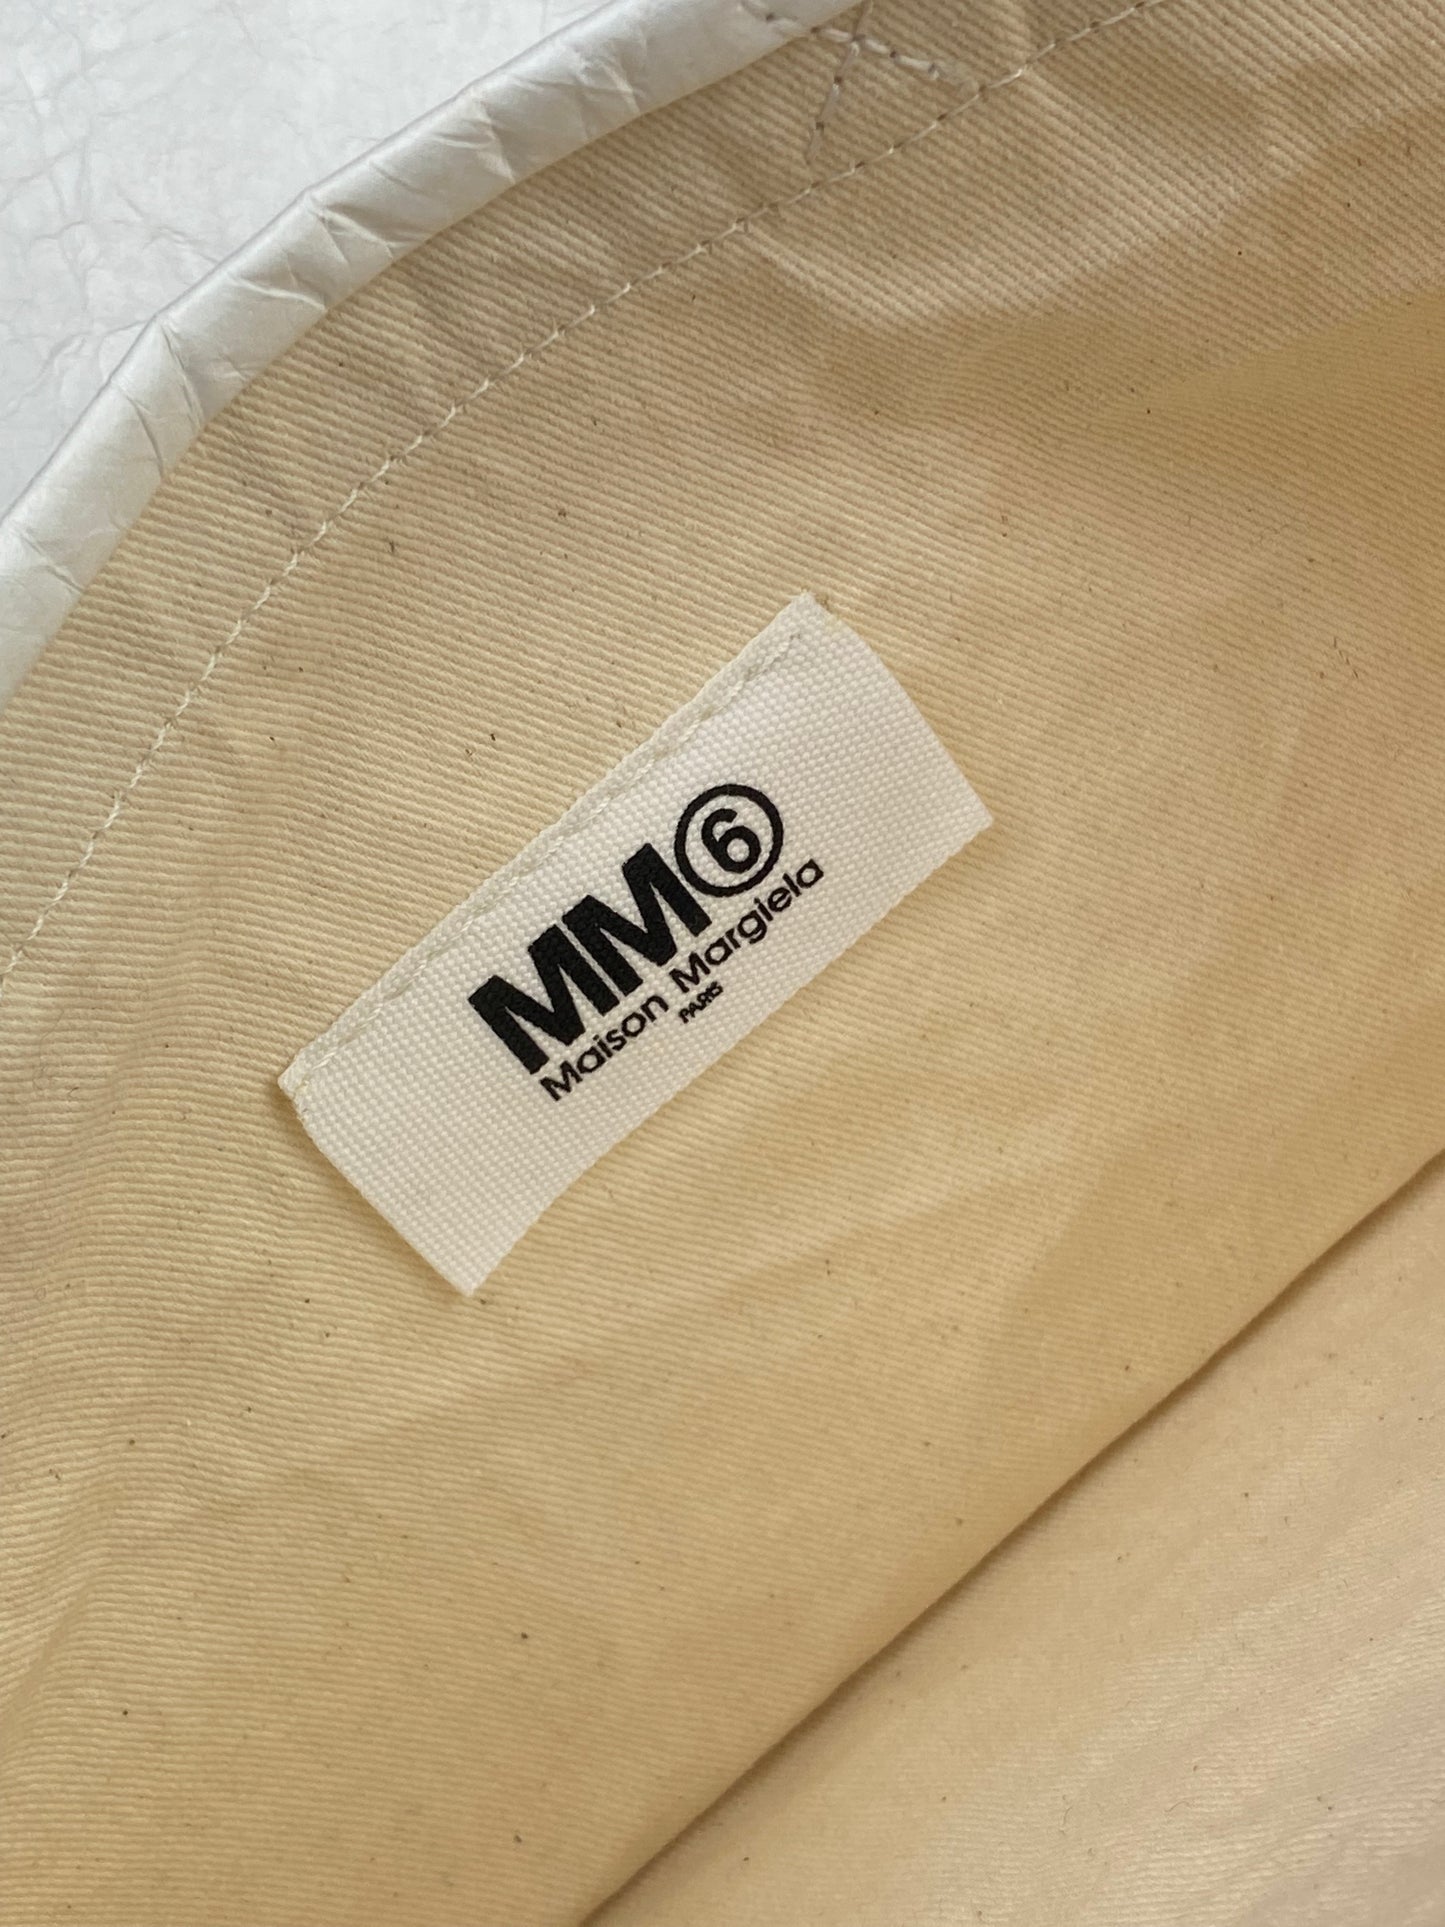 MAISON MARGIELA 'MM6' CRINKLE TOTE BAG.